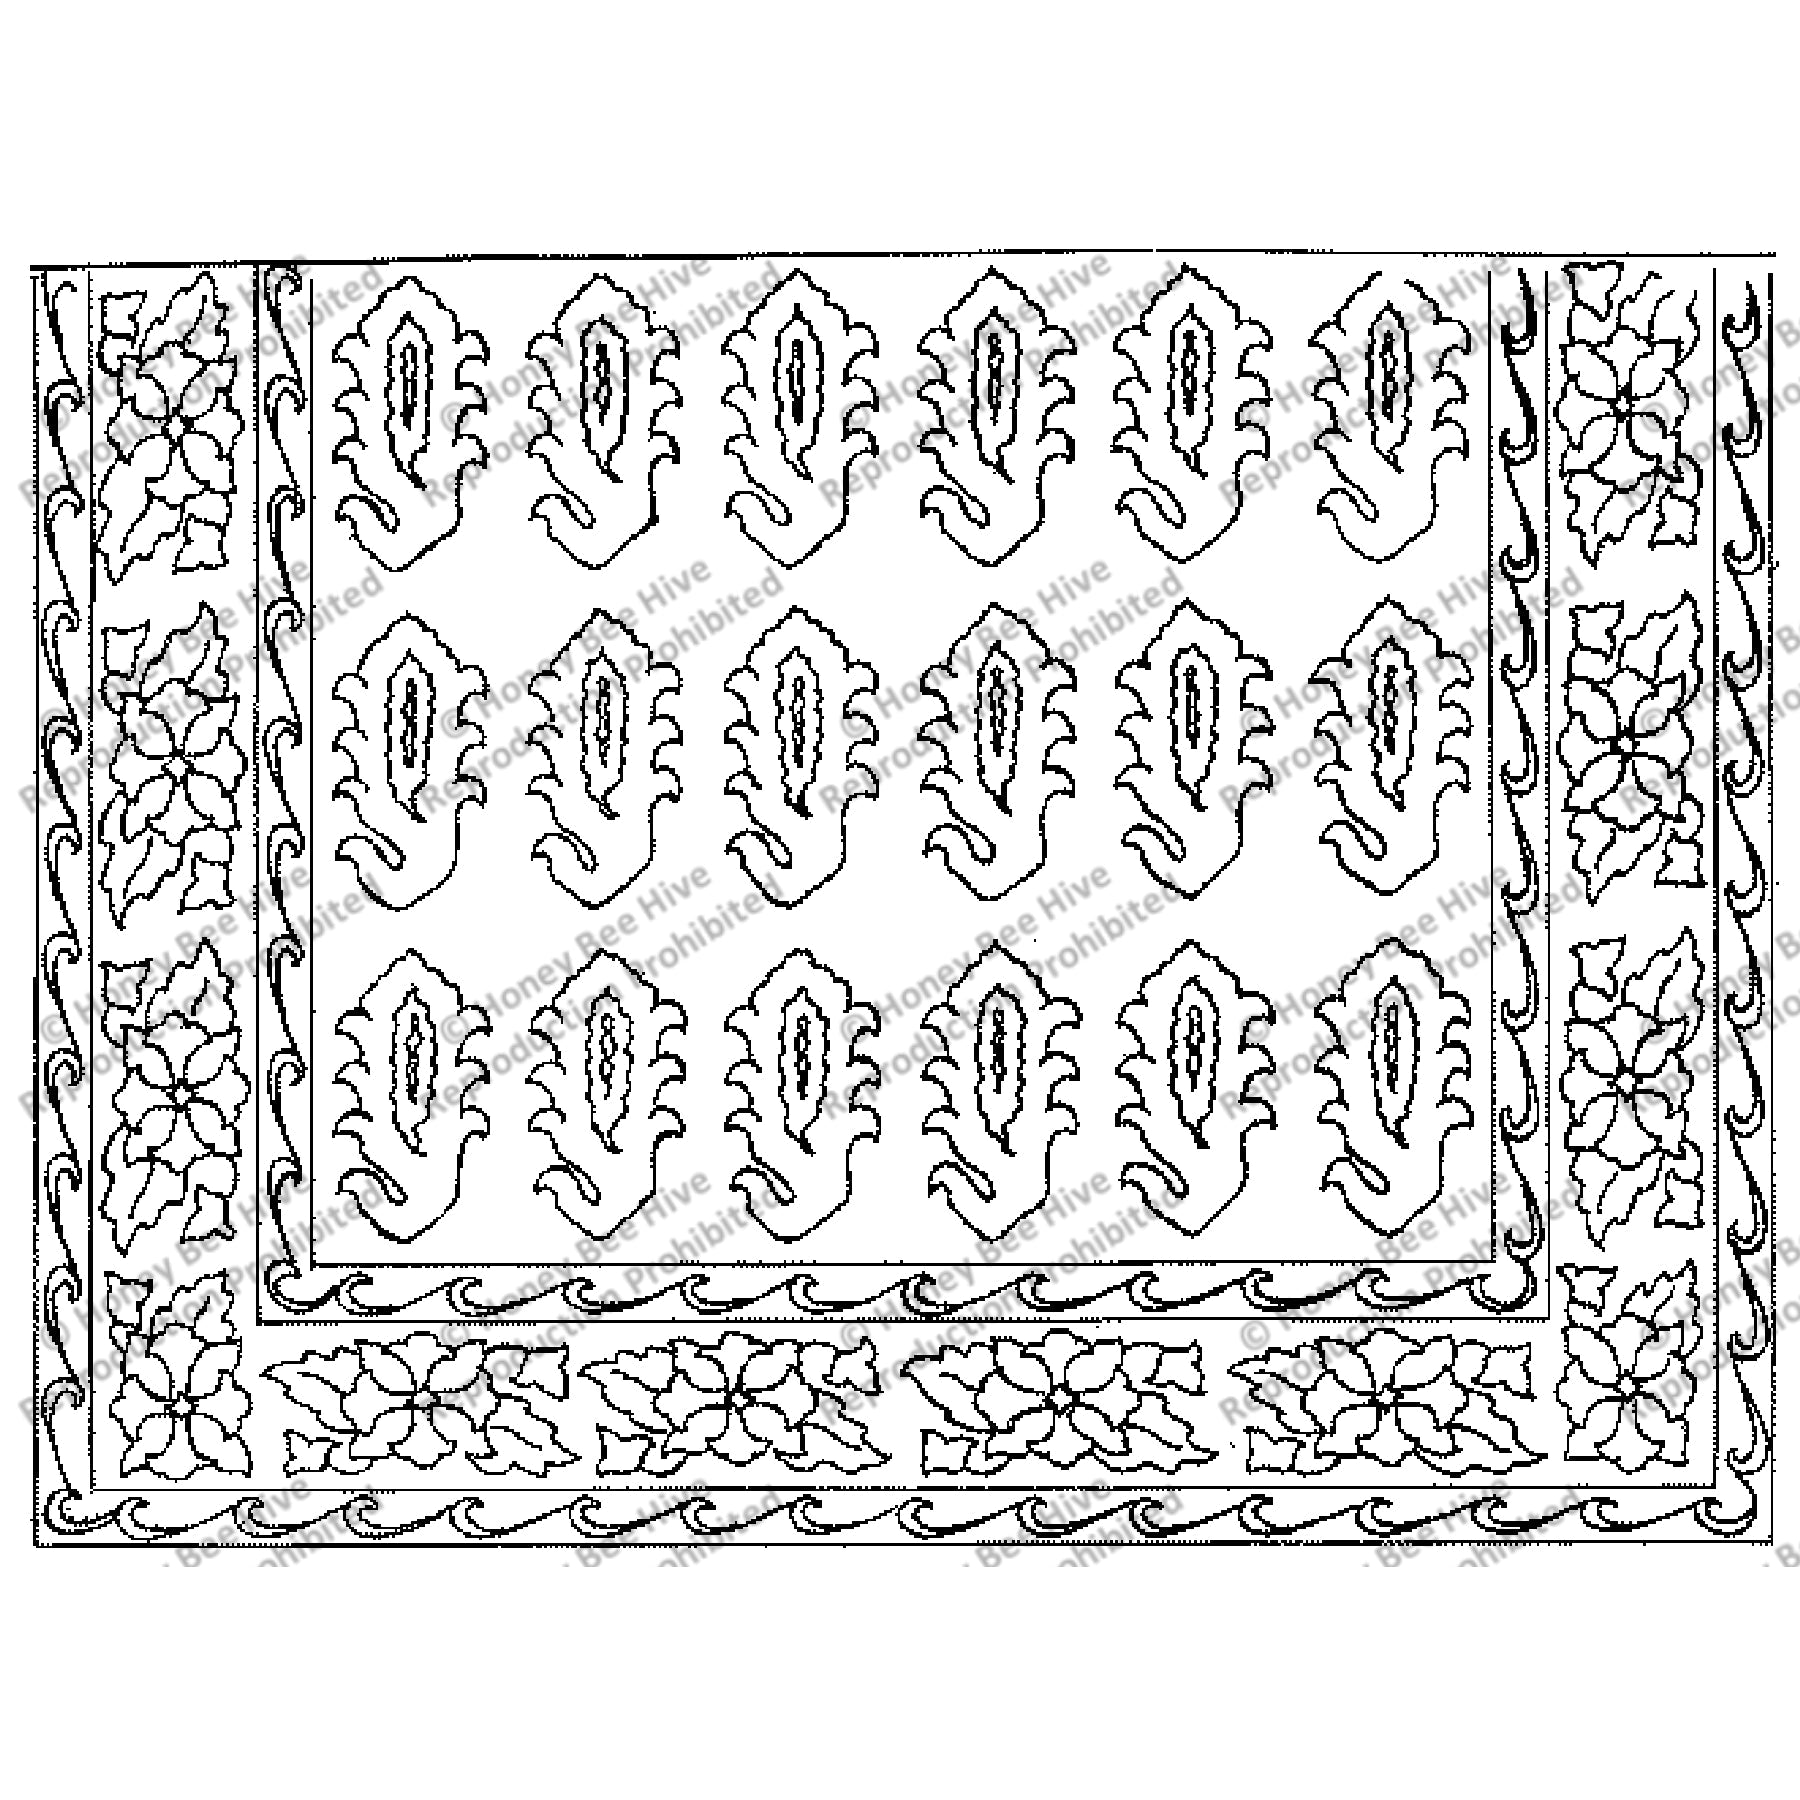 Trinity, rug hooking pattern